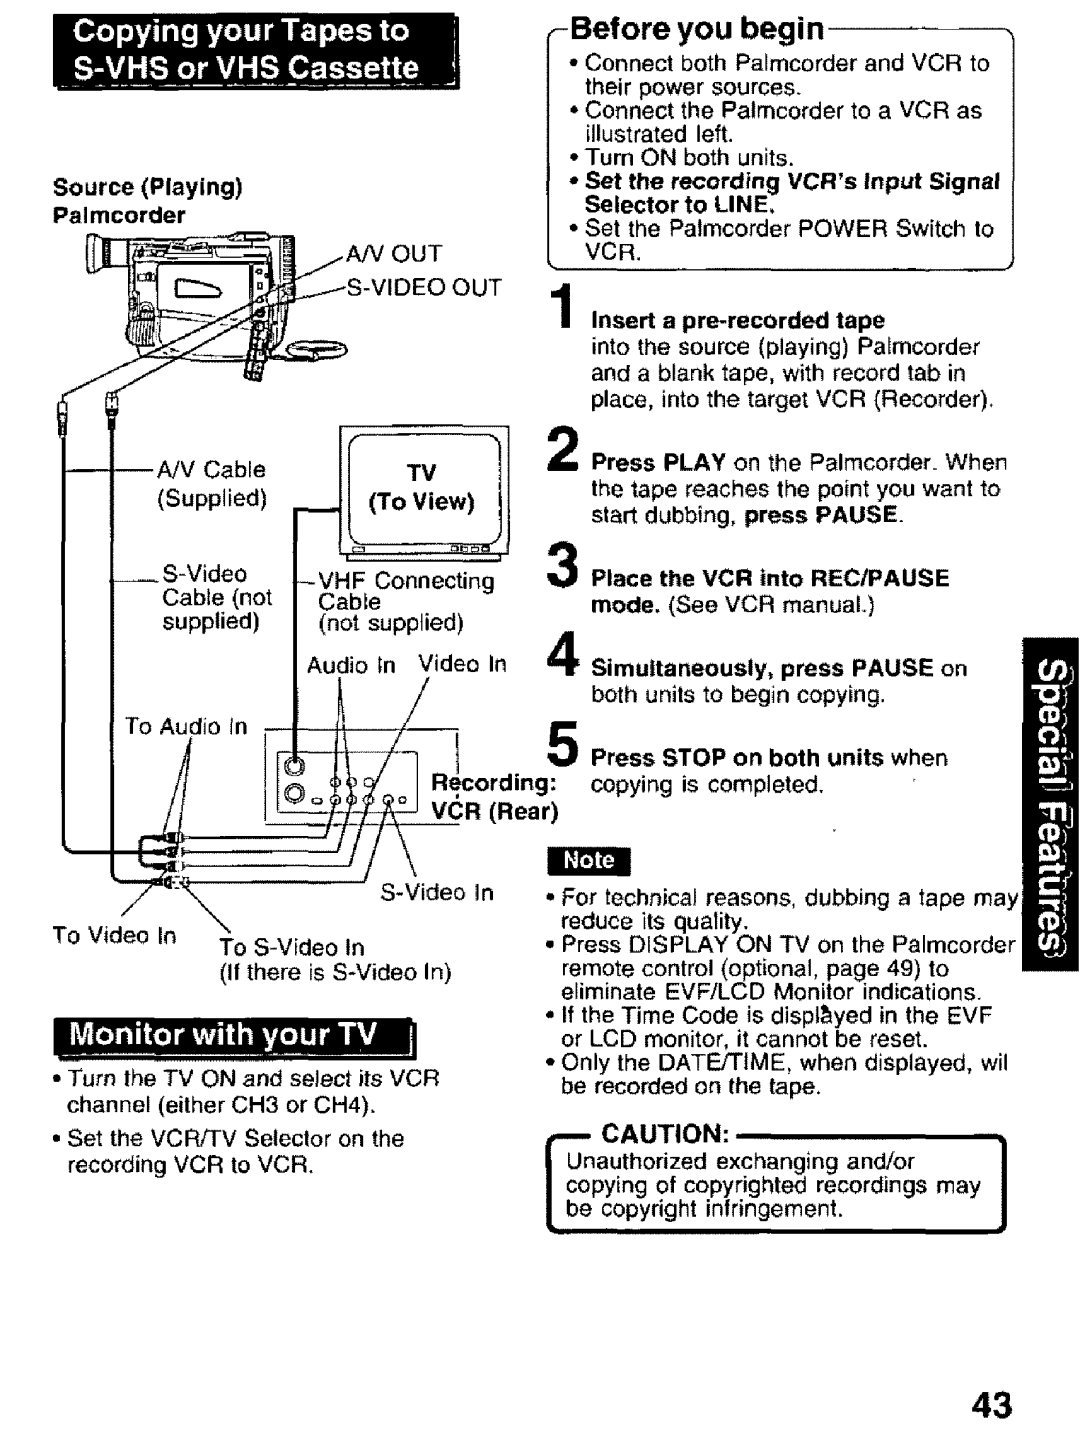 Panasonic PV-DV101 manual SourcePlaying Palmcorder, Before you begin, Lvt., 1i.rA,,it ,IML.,!I 